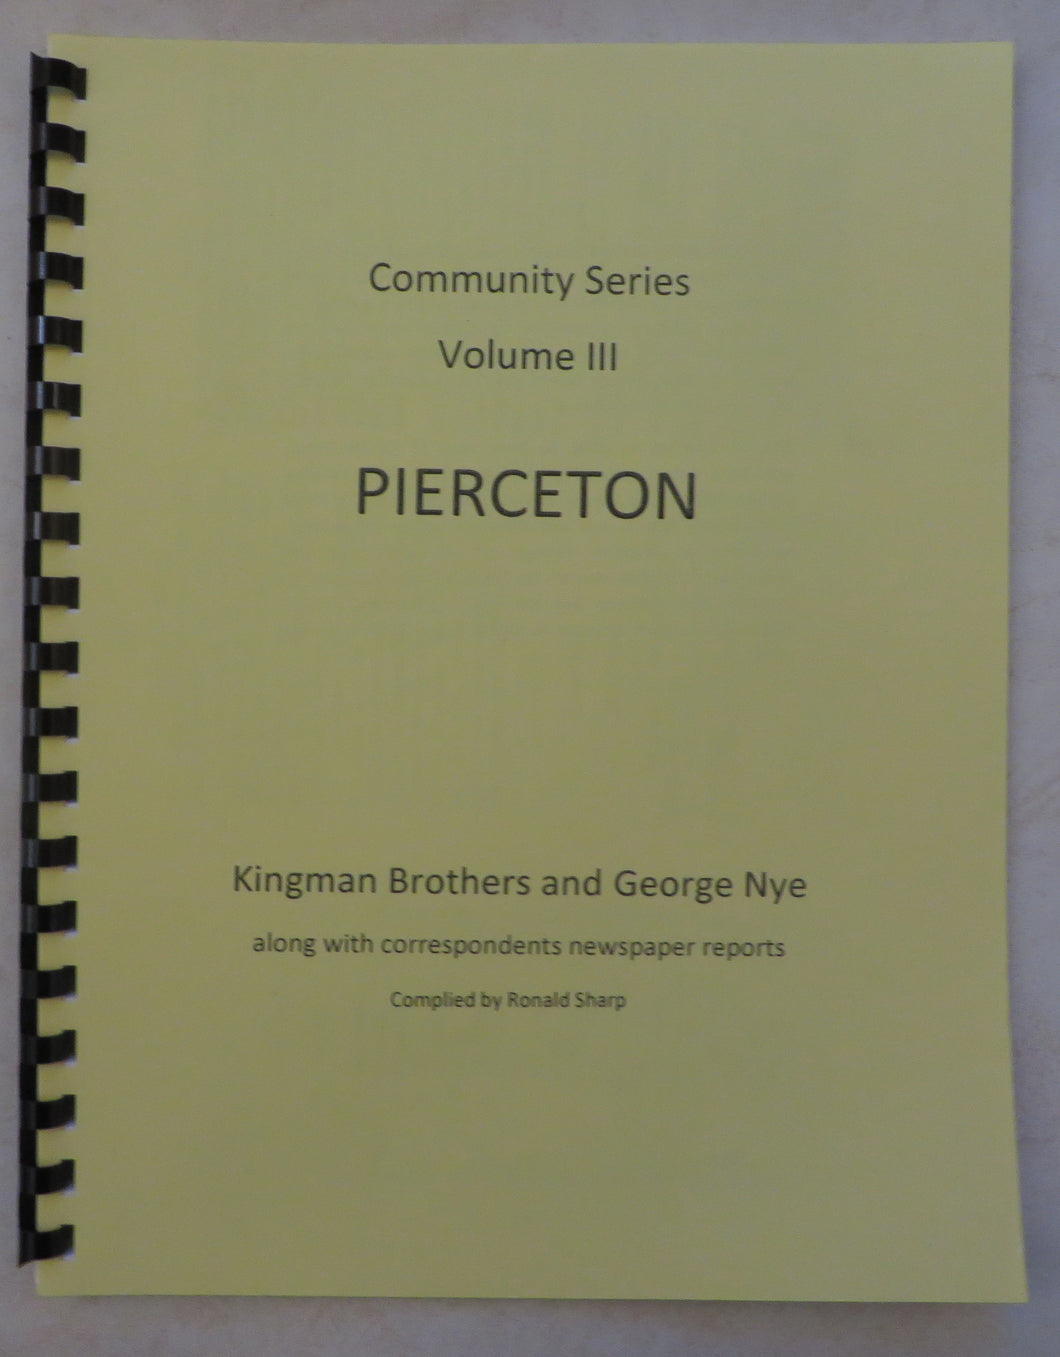 Community Series, Volume 3, Pierceton by Kingman Brothers and George Nye